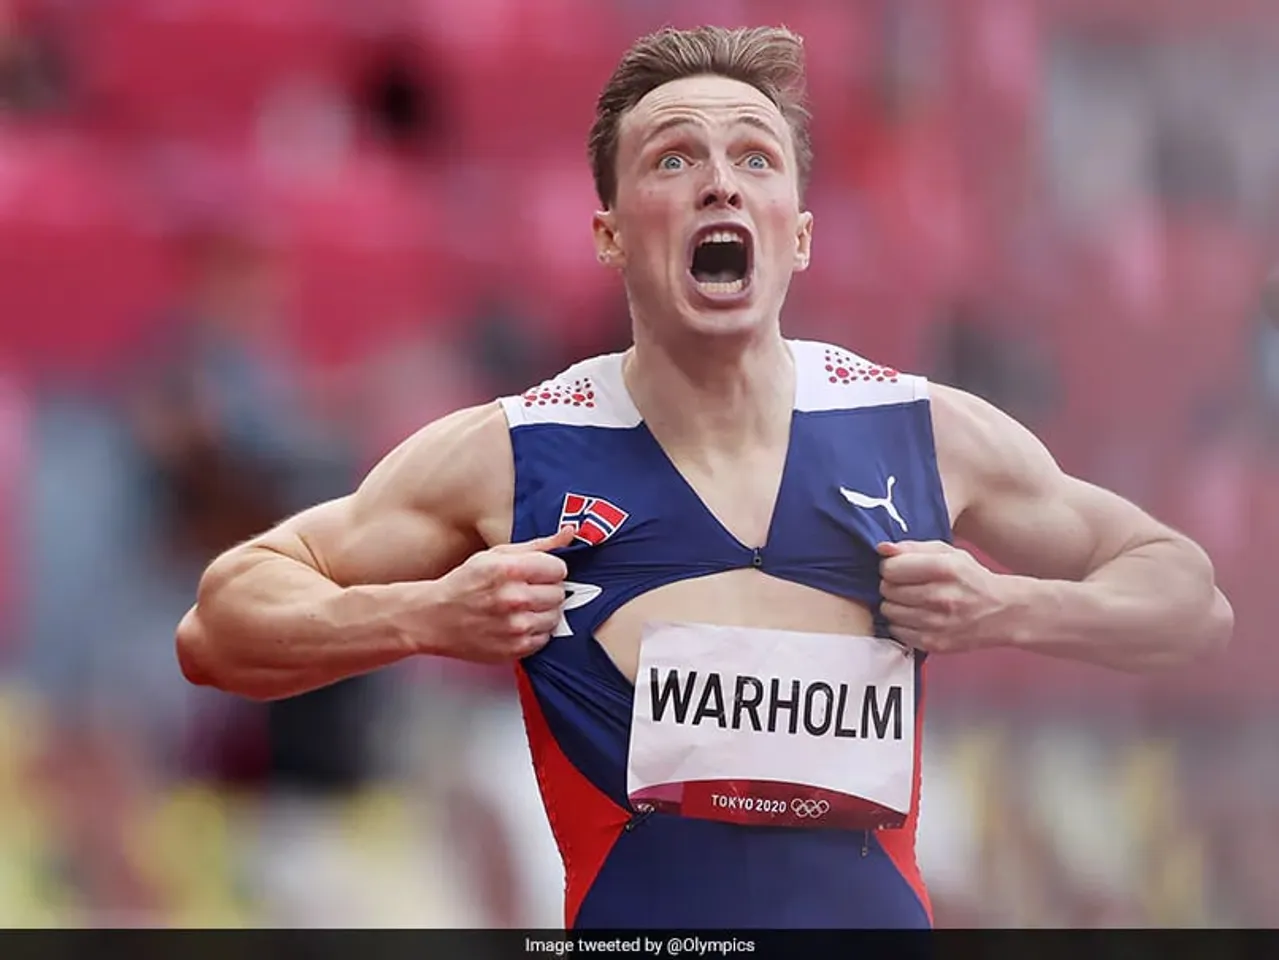 Karsten Warholm of Norway wins the men's 400-meter hurdles, setting a world record